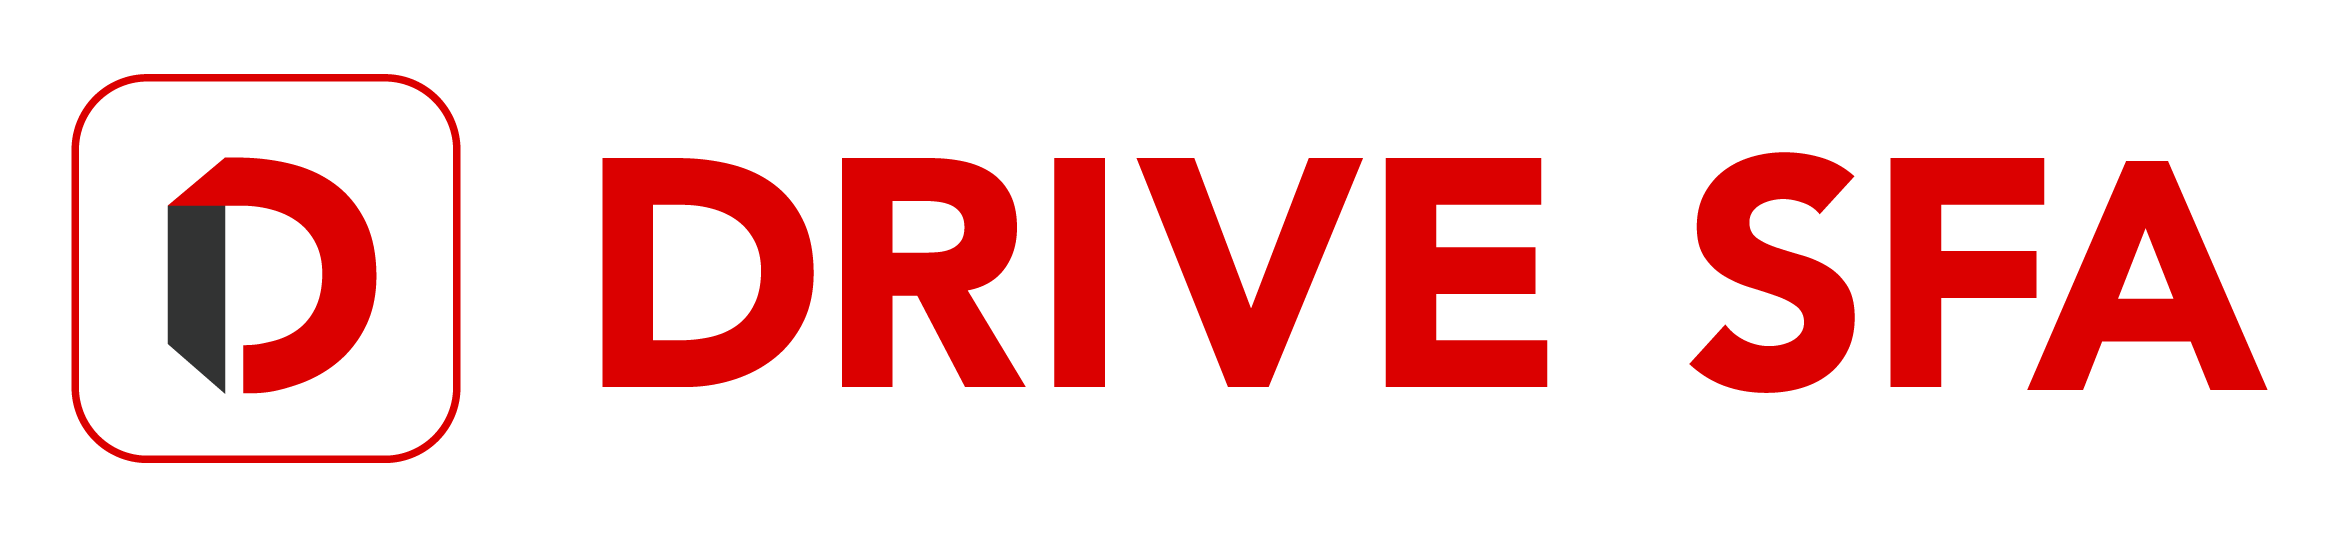 DRIVESFA logo